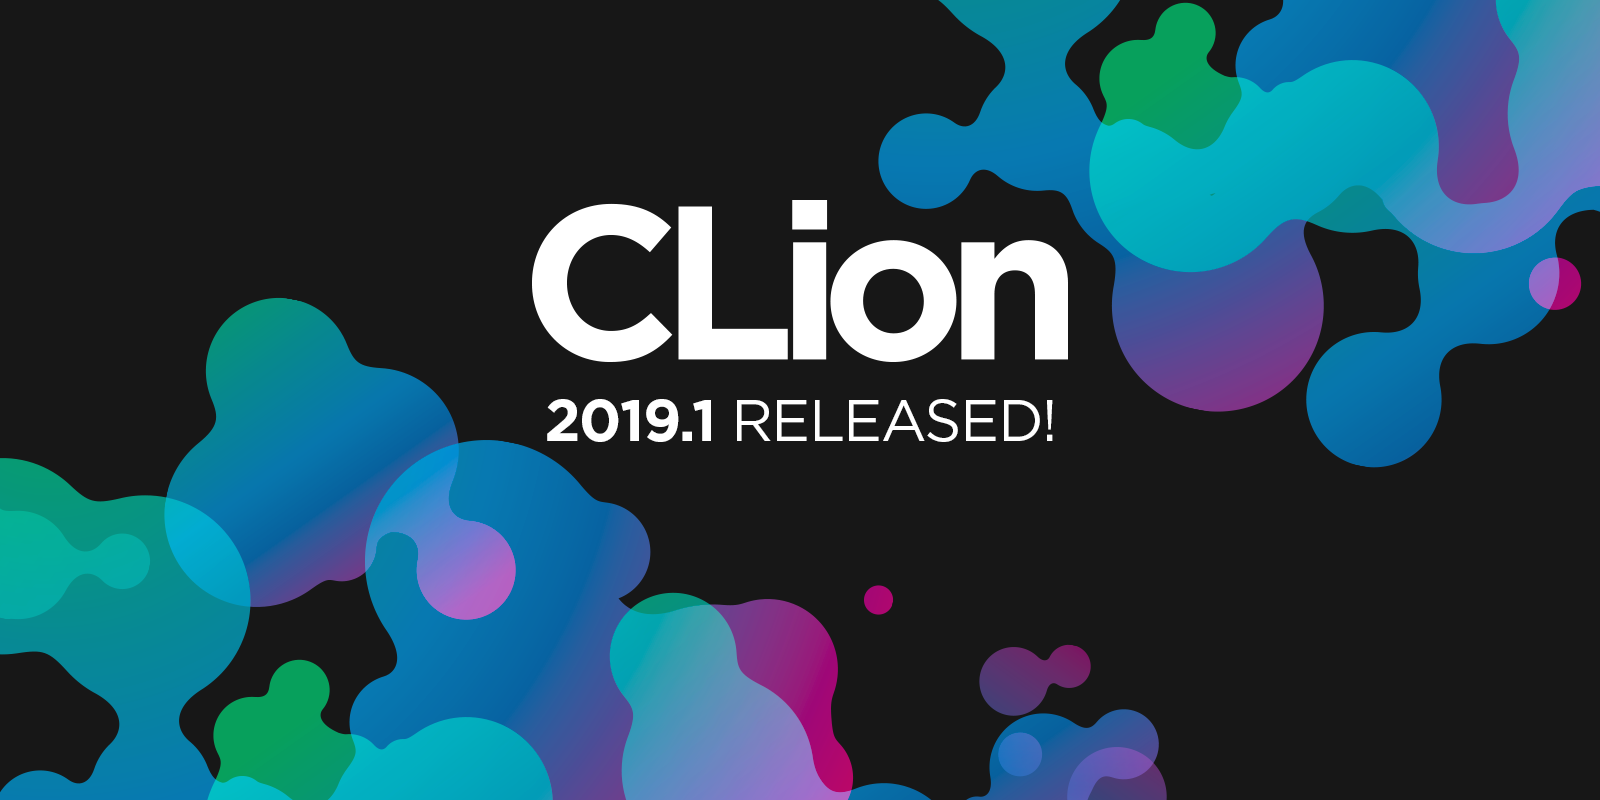 CLion 2019.1 release